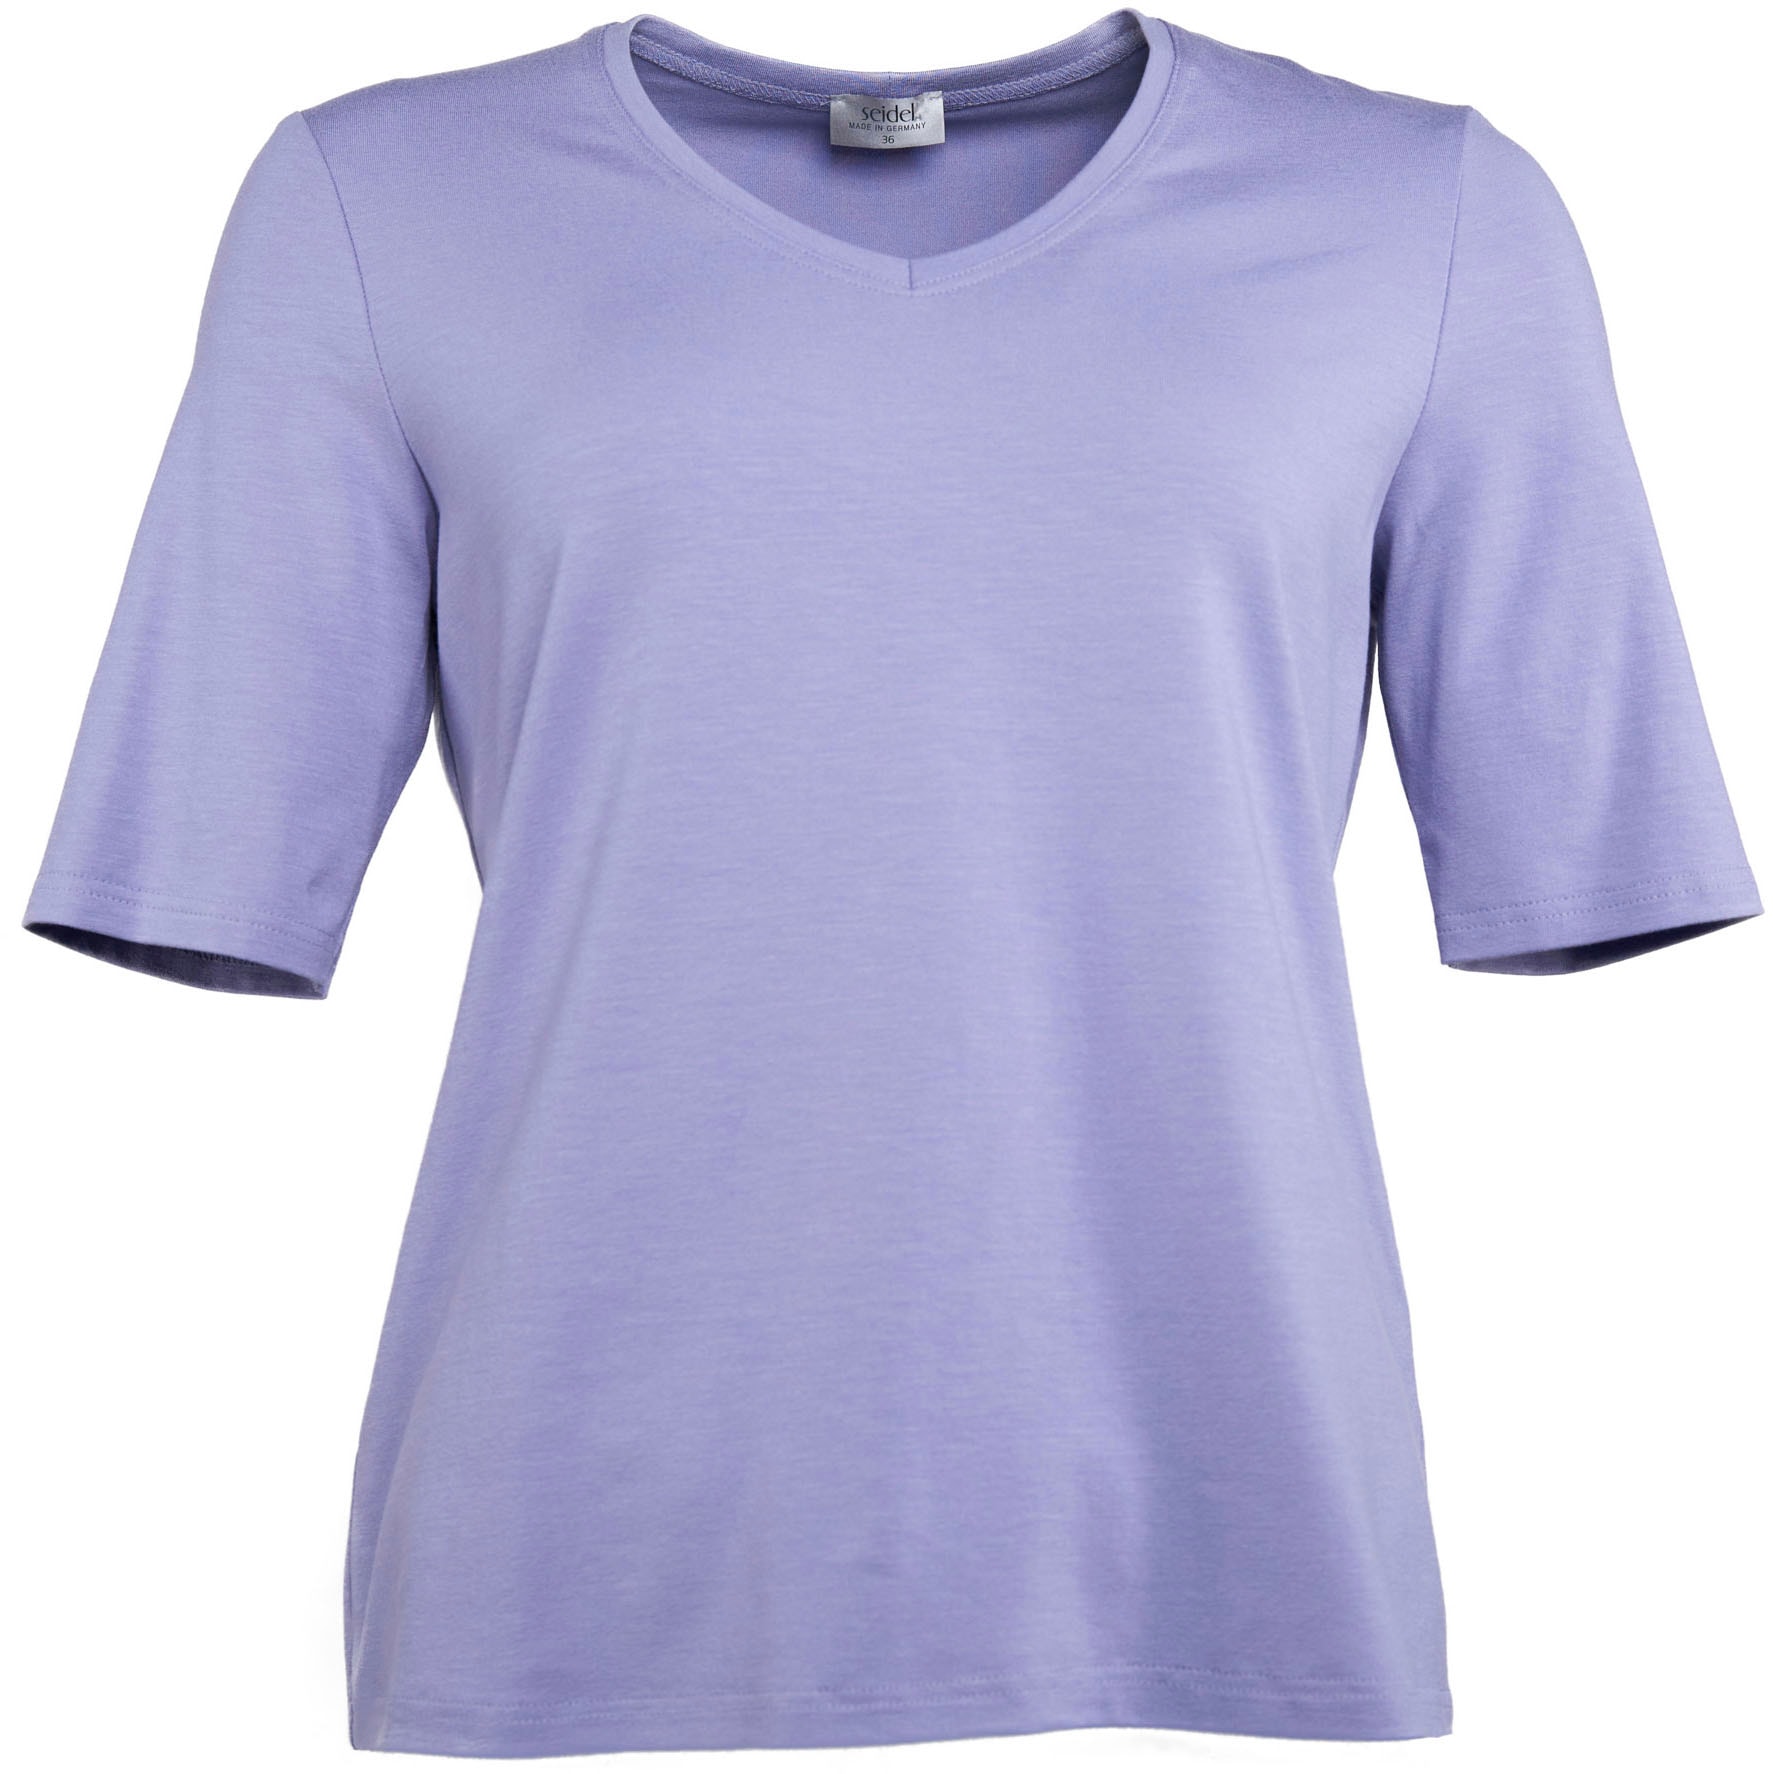 ♕ Seidel Moden V-Shirt, mit Halbarm aus softem Material, MADE IN GERMANY  versandkostenfrei bestellen | V-Shirts